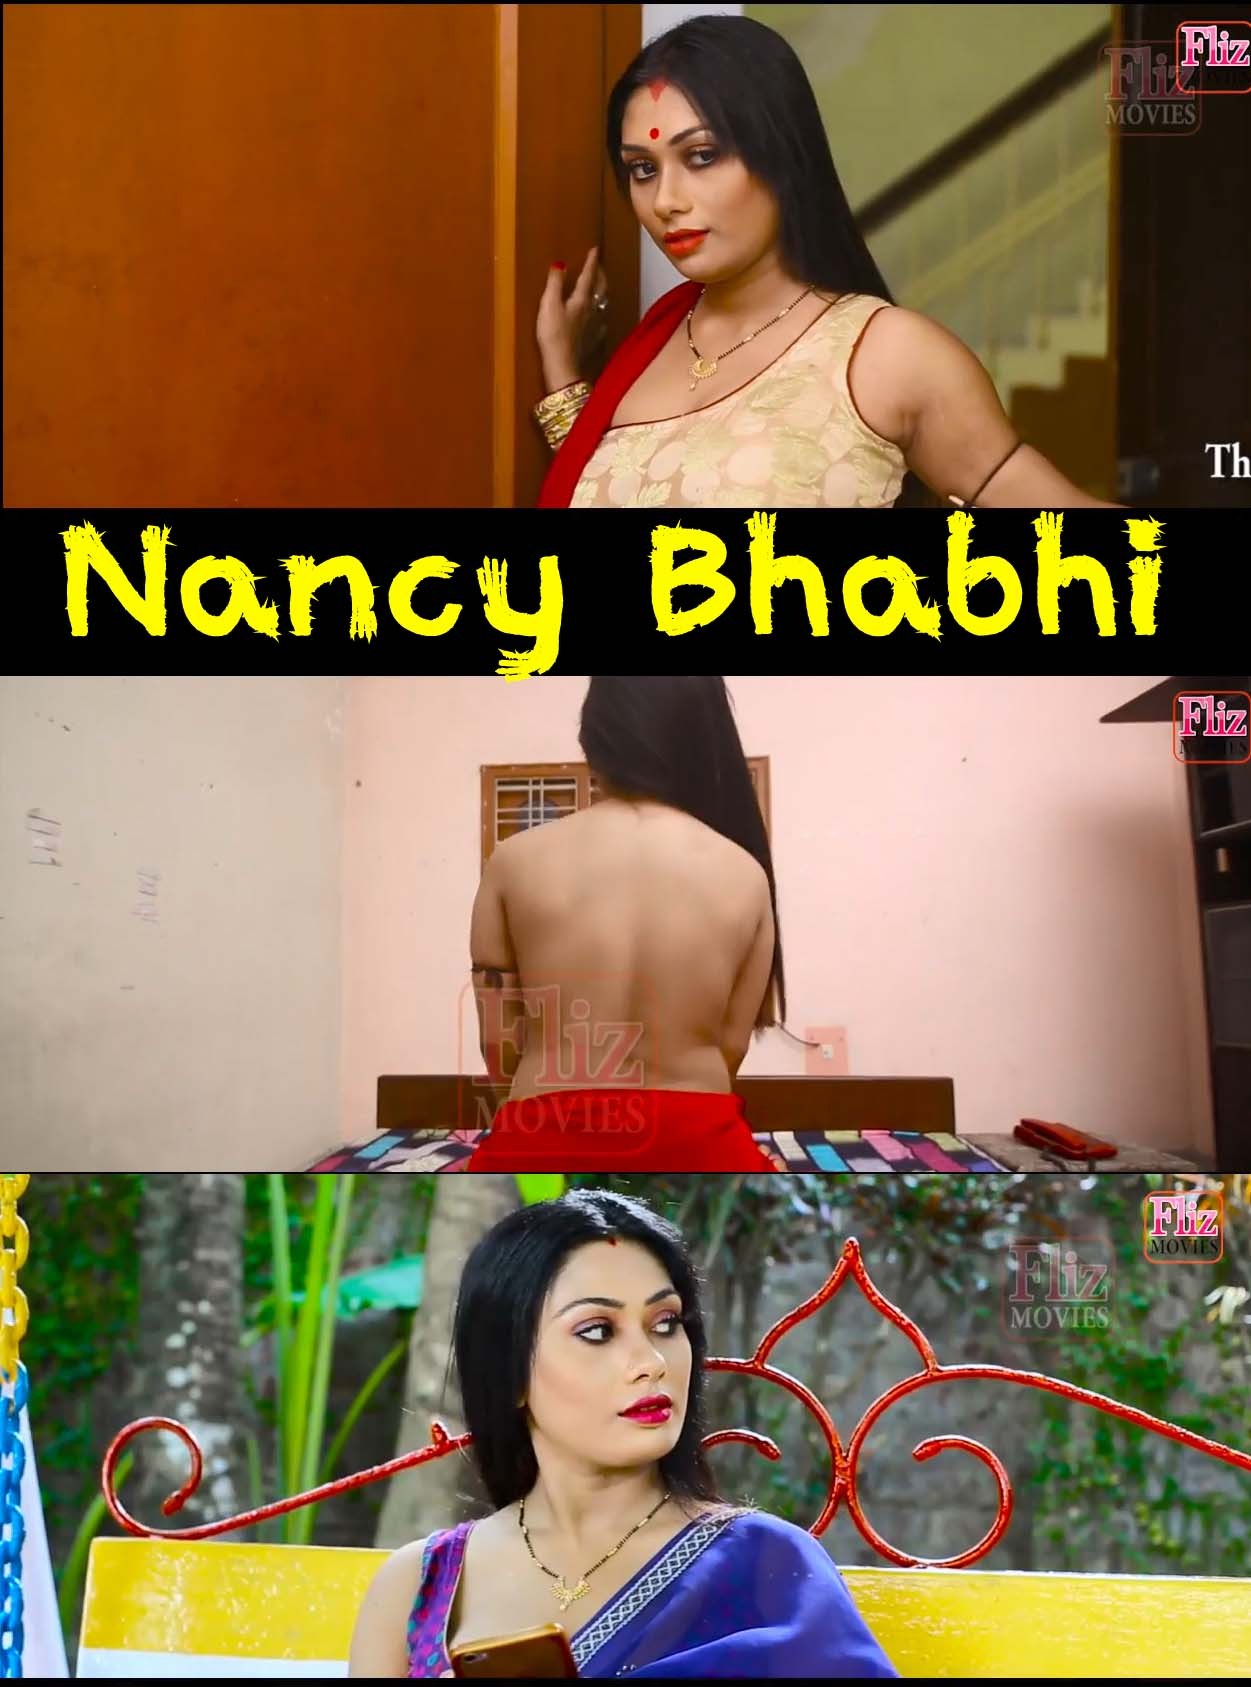 [18+] Nancy Bhabhi (2019) Fliz Movies Hindi Web Series Season 01 Episode 02 – 1080p – 720p – 480p HDRip x264 Download